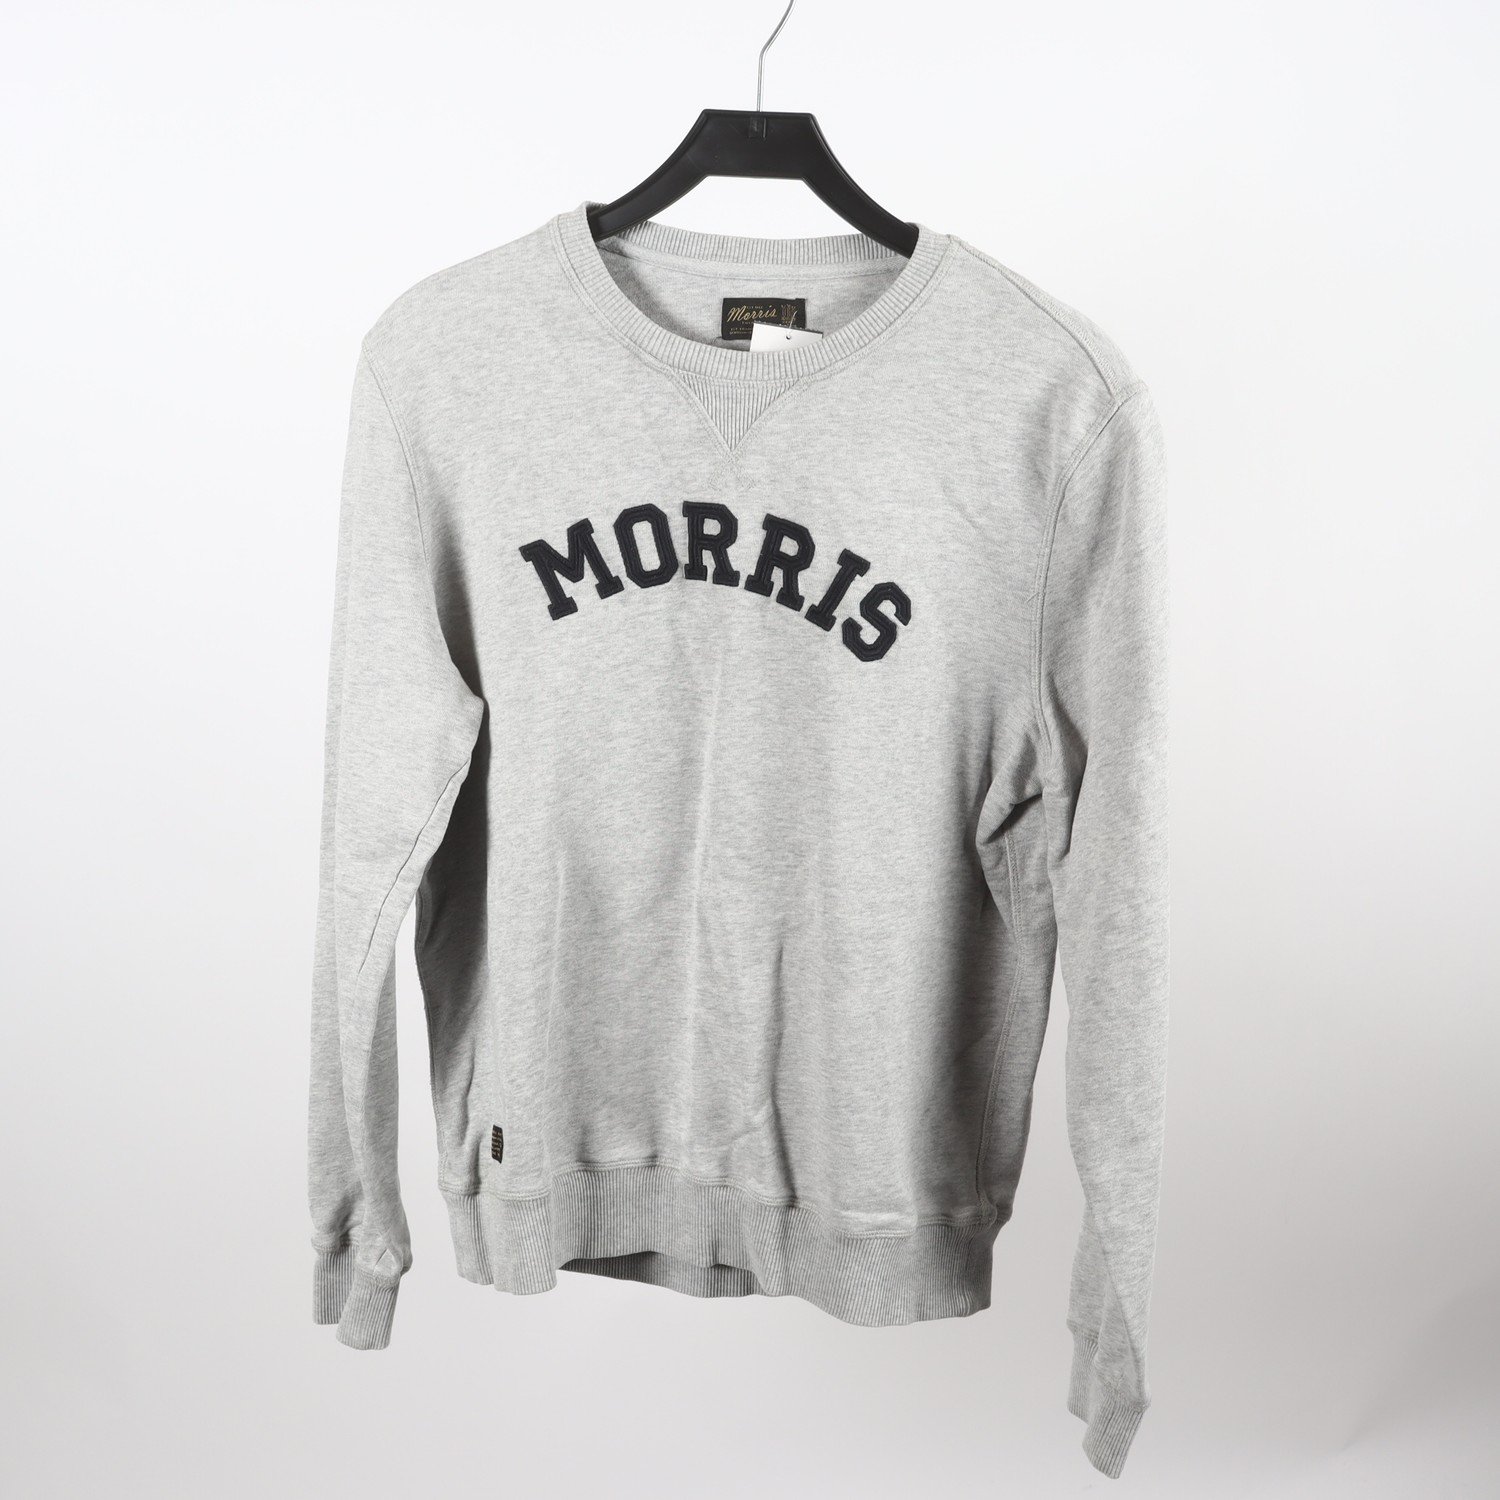 Sweatshirt, Morris, grå, stl. M